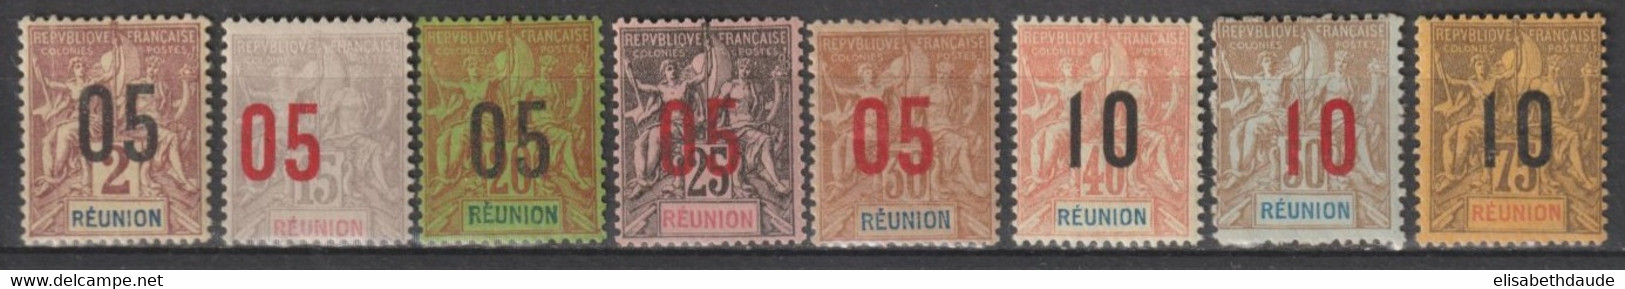 REUNION - 1912 - SERIE COMPLETE - YVERT N° 72/79 * MH (BELLE VARIETE DENTELURE DU 78 !) - COTE = 30+ EUR. - - Unused Stamps